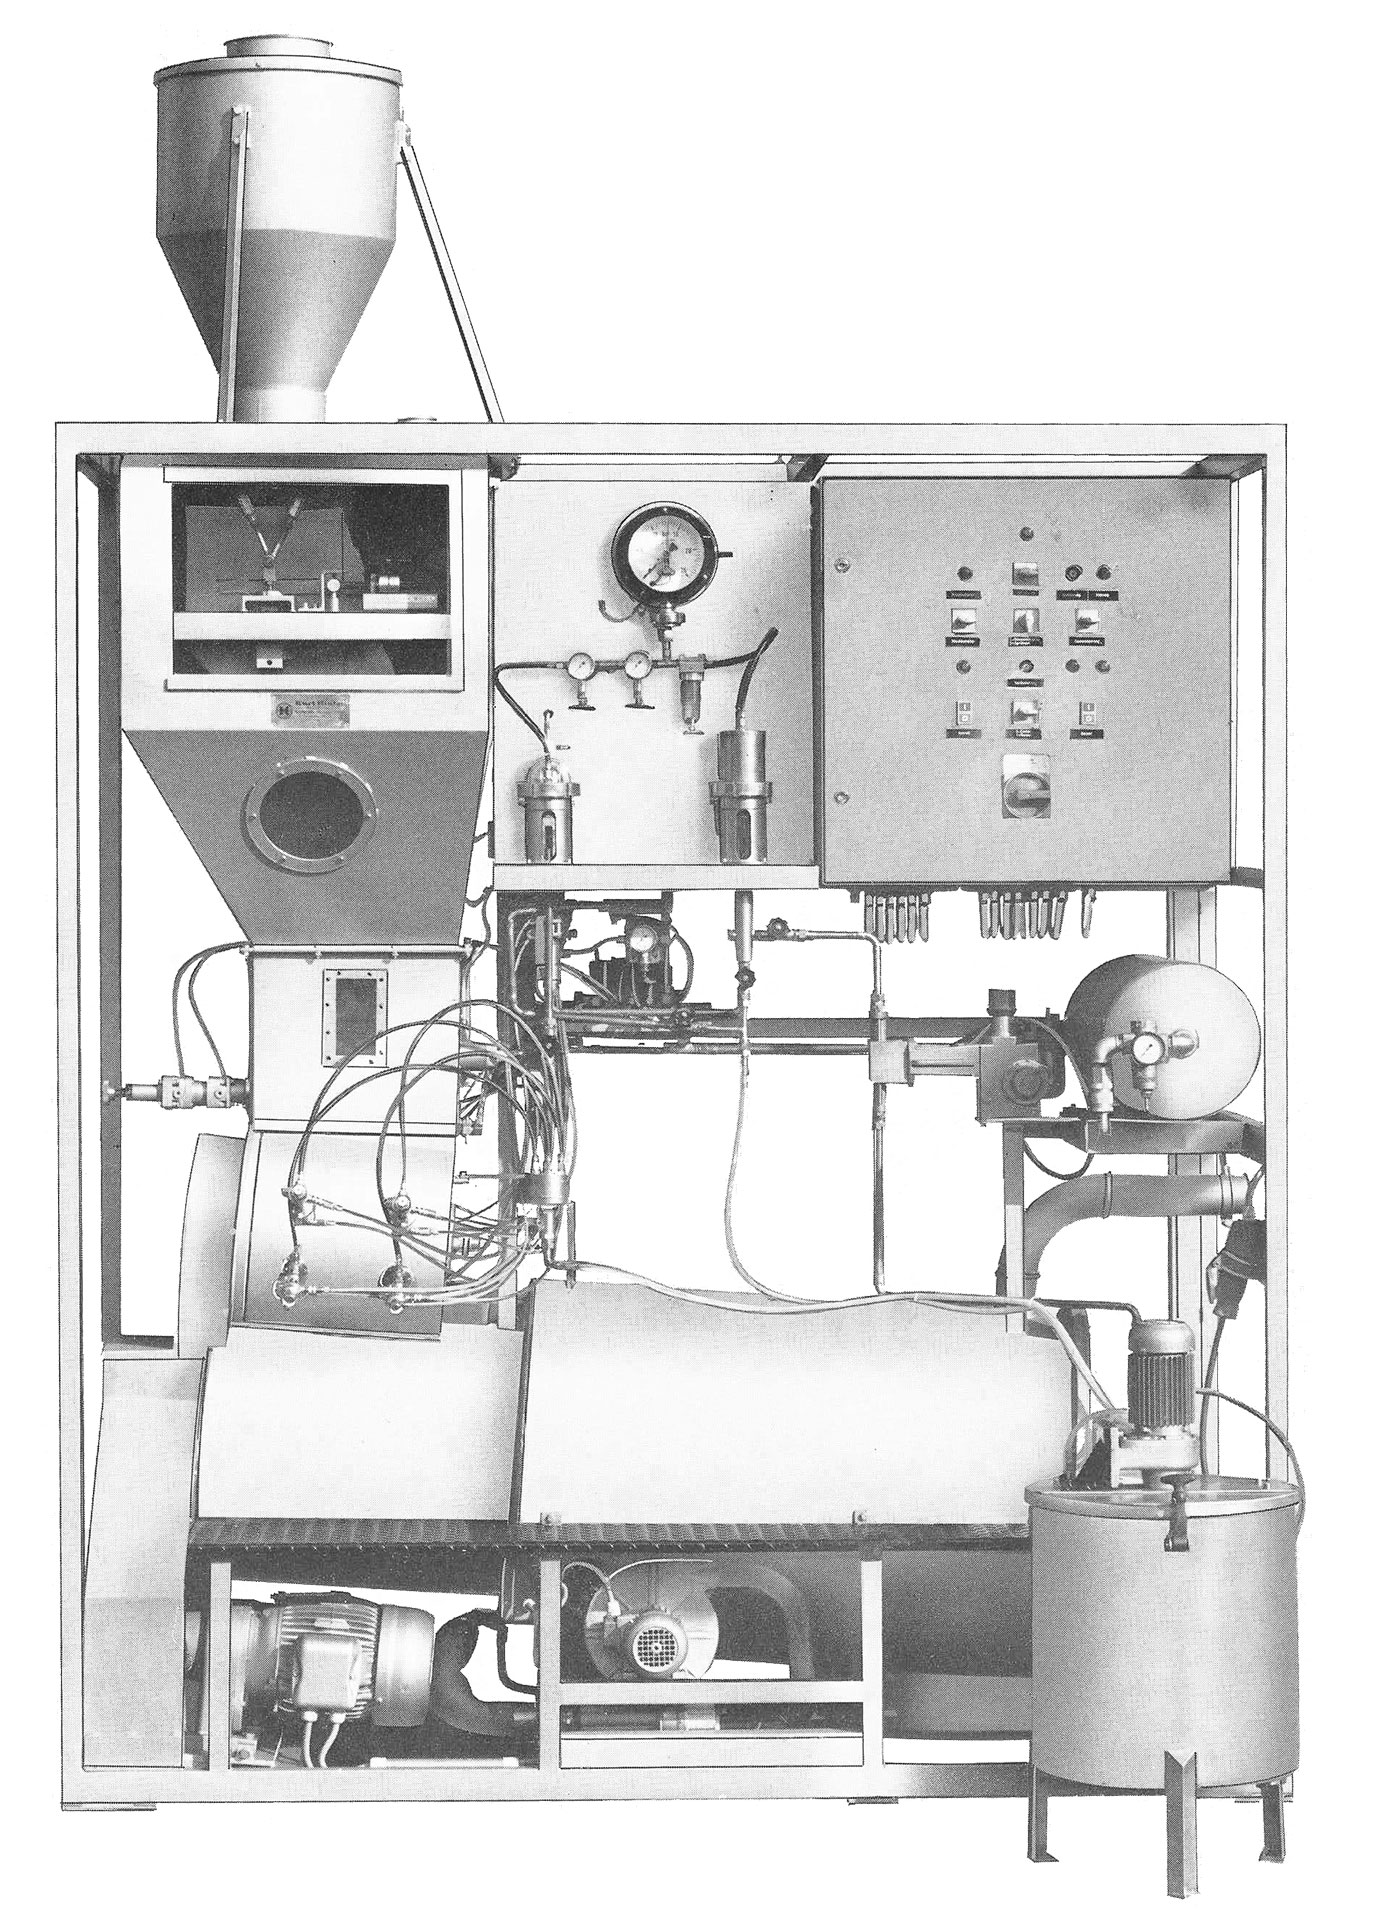 Seed treating machine of HINZE (1983)